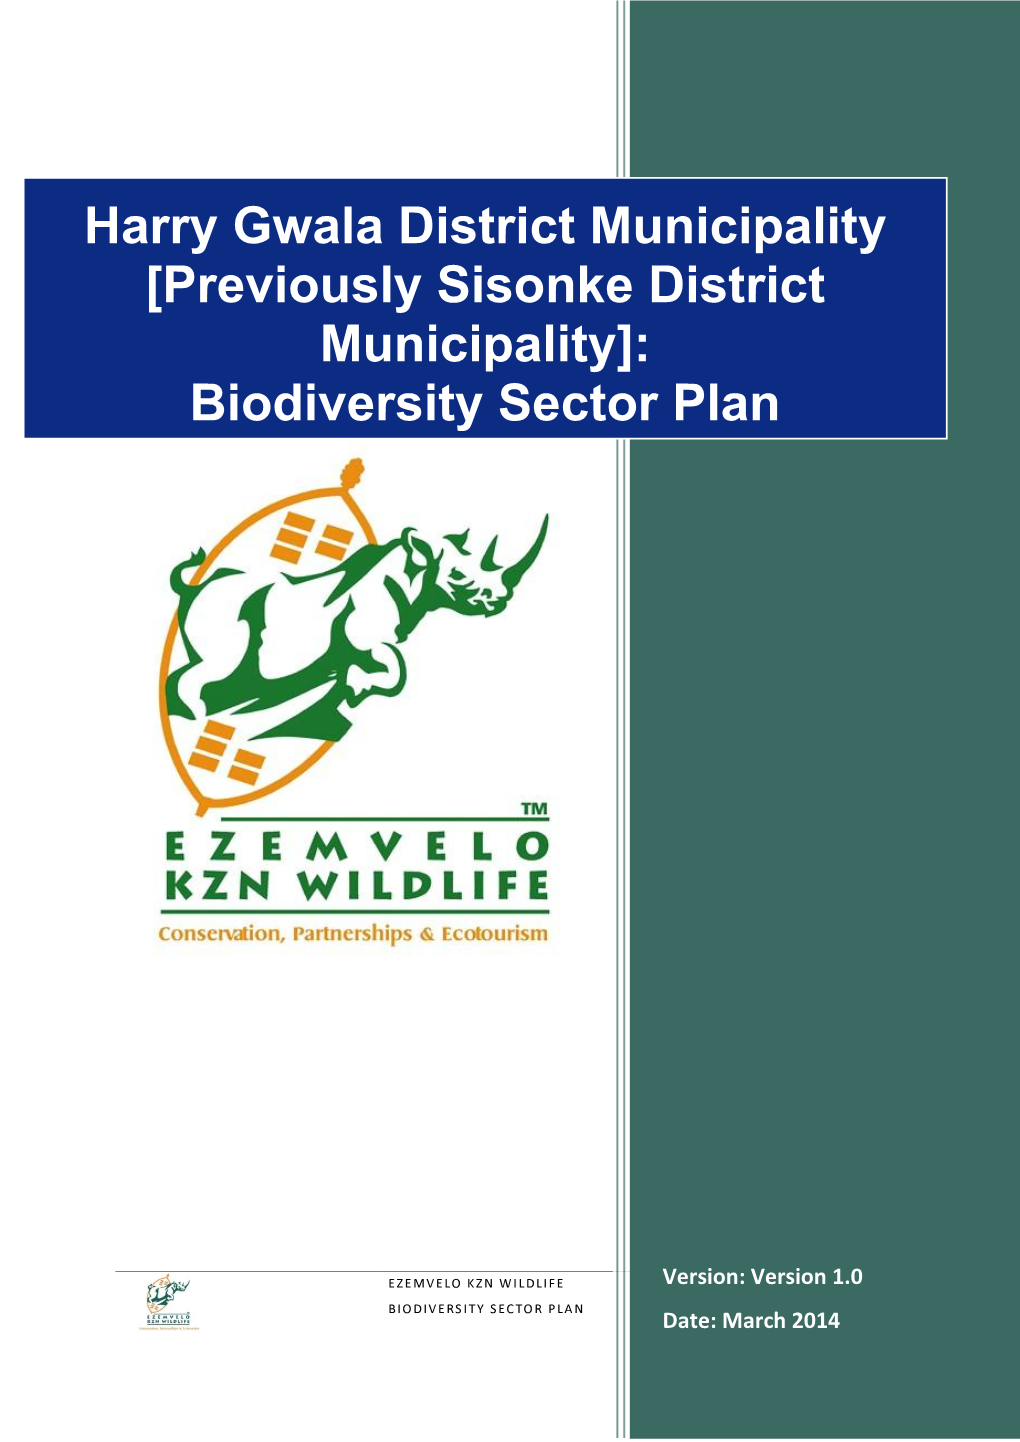 Harry Gwala District Municipality: Biodiversity Sector Plan